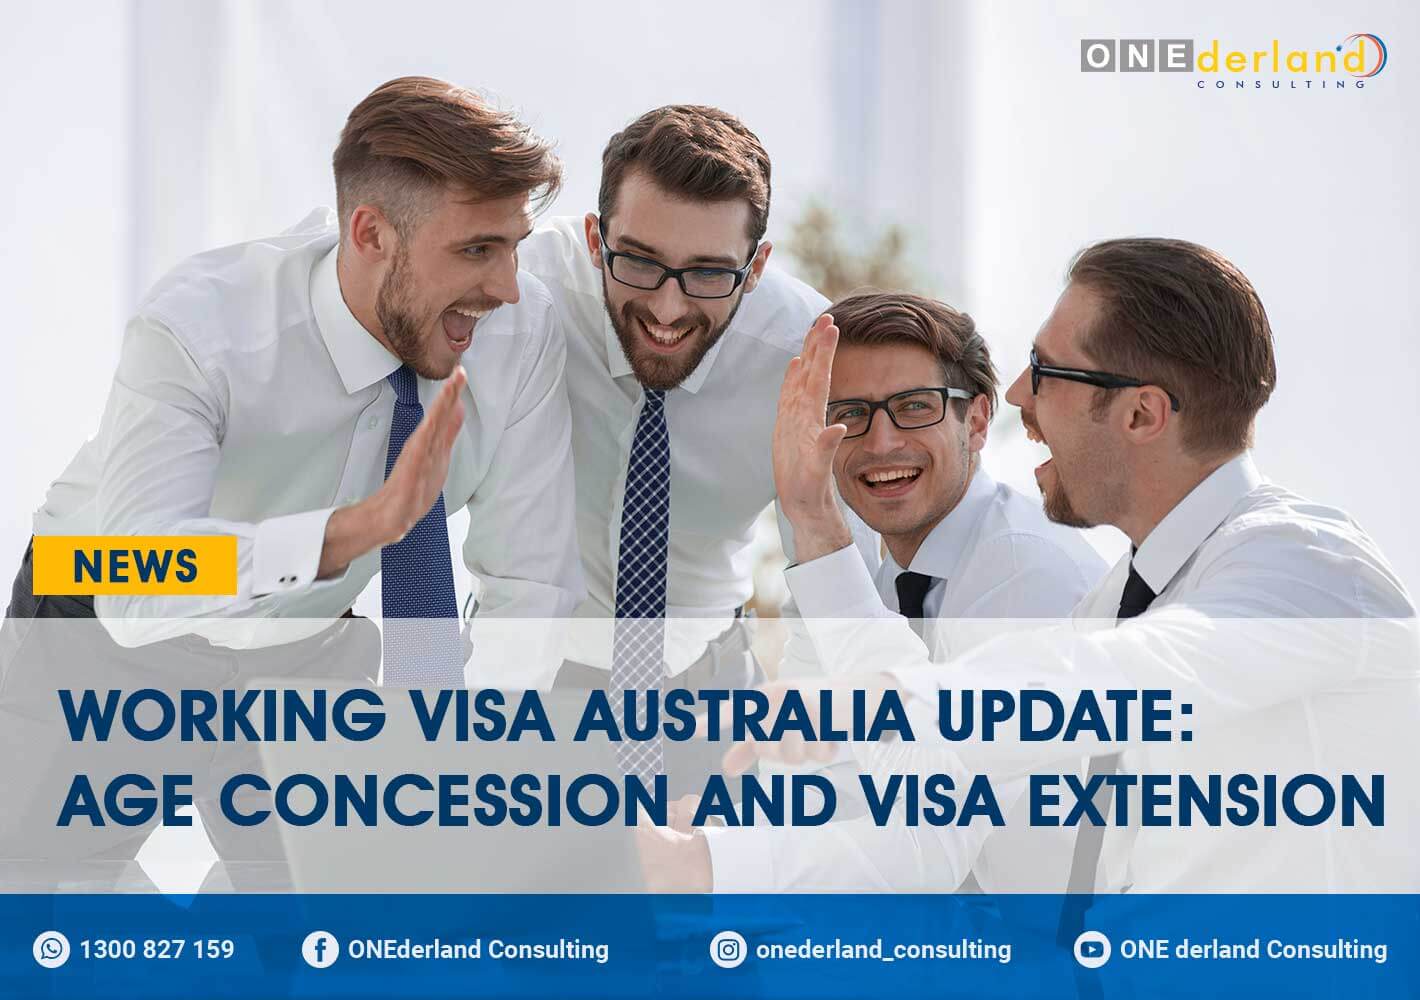 Update for Working Visa Australia: Age Concession for Visa 457 and Visa Extension for Visa 482